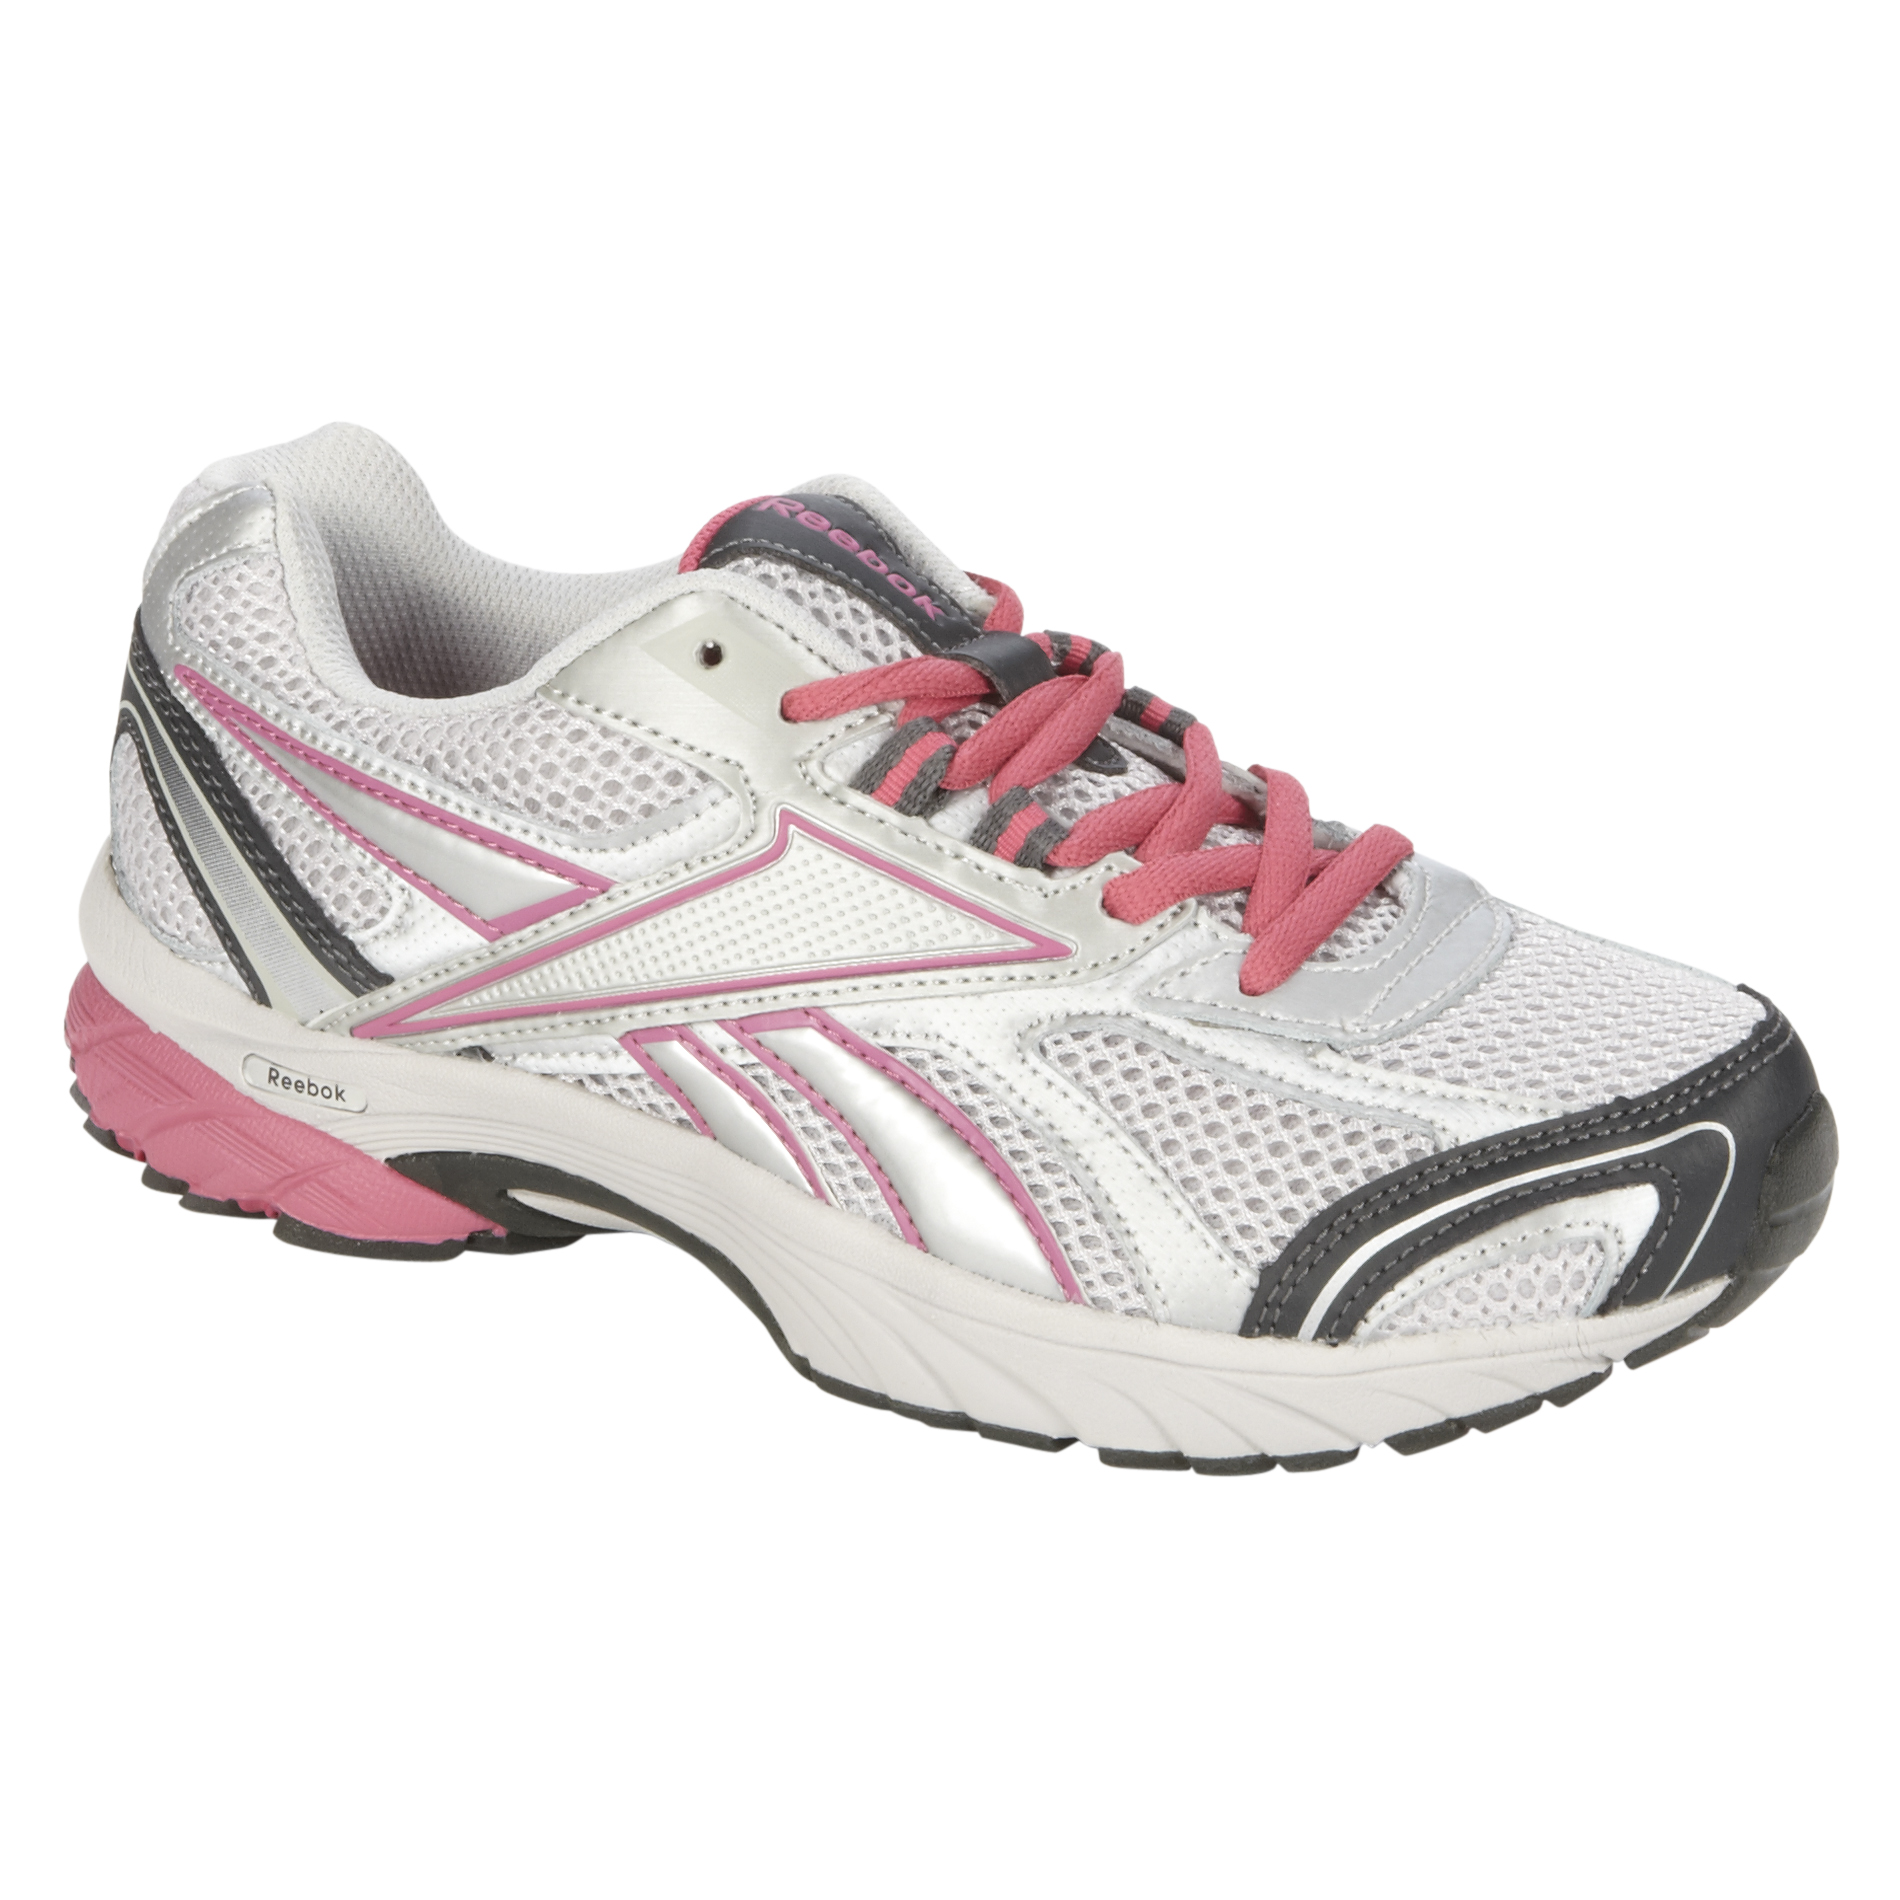 Reebok Women's Pheehan Run White/Pink Running Shoes Wide Width